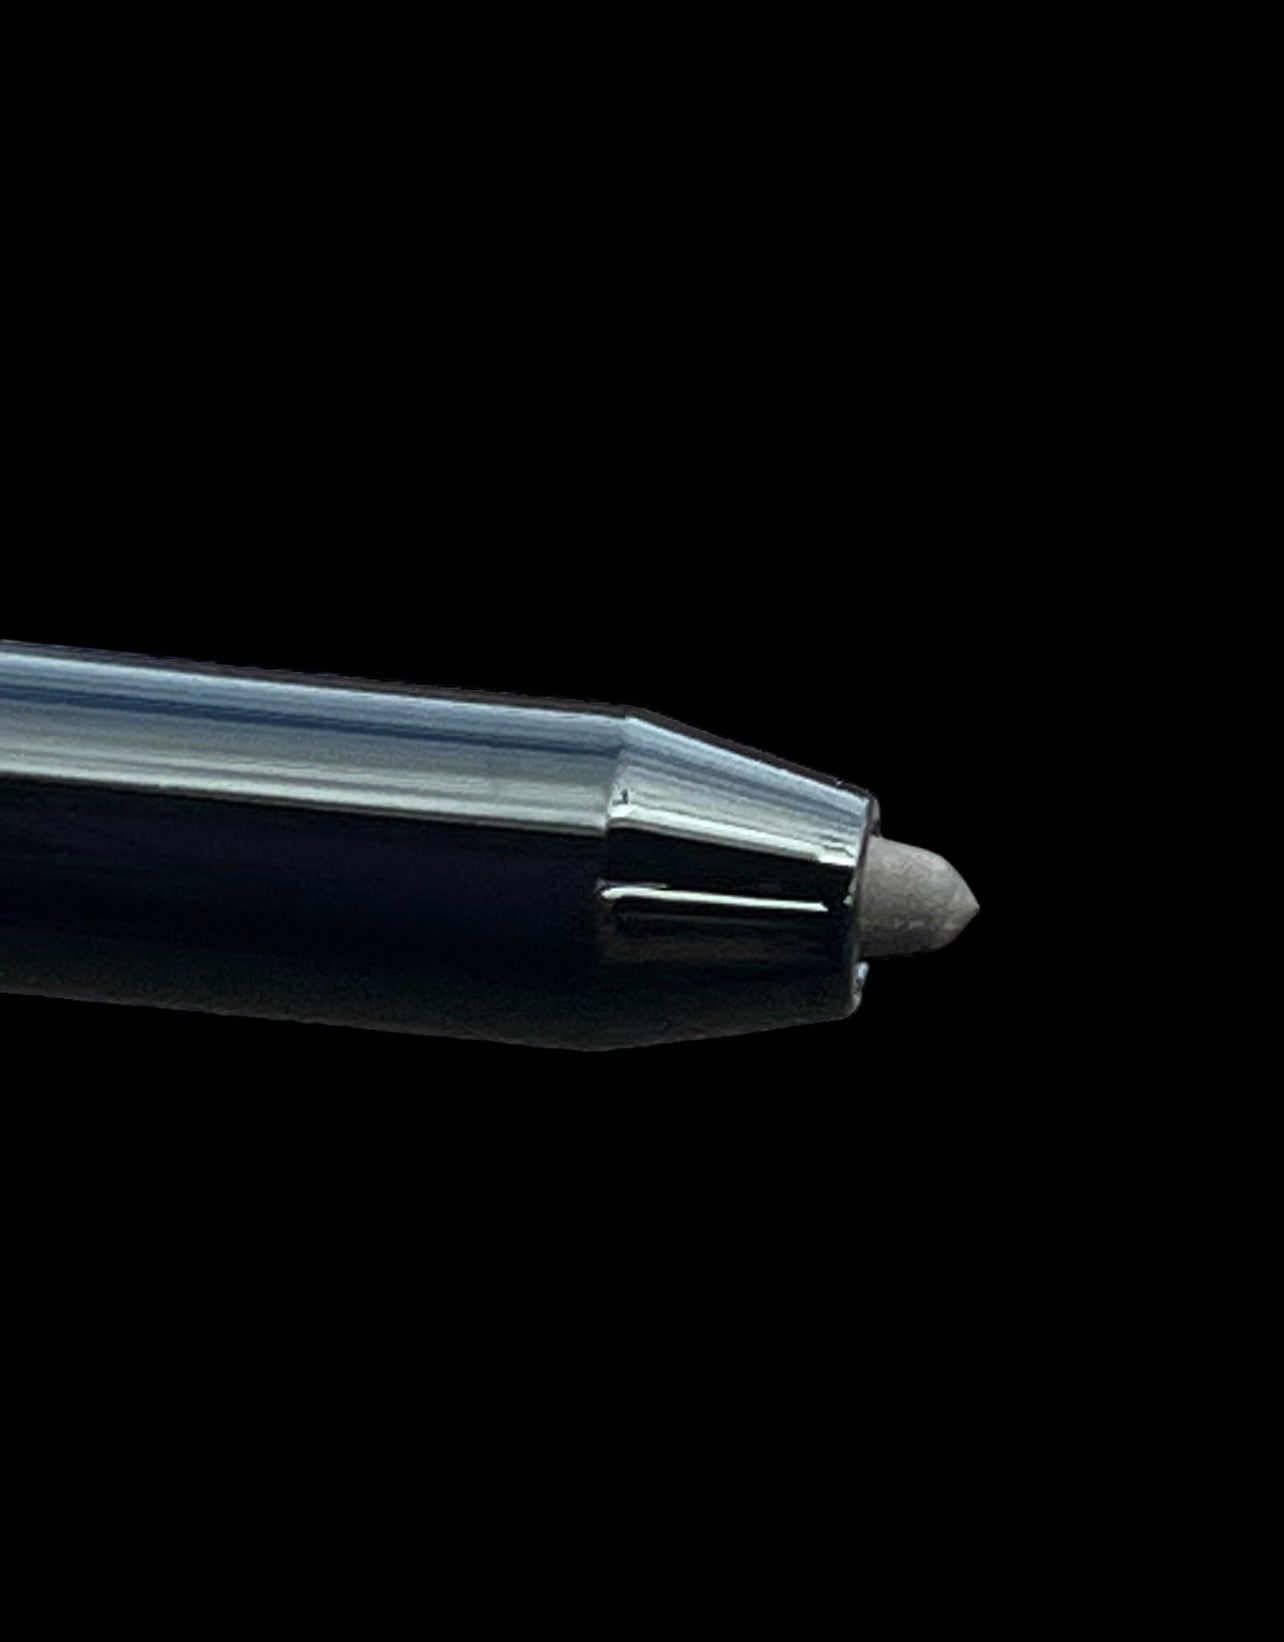 KVD Tattoo Pencil Liner in Magnetite Grey